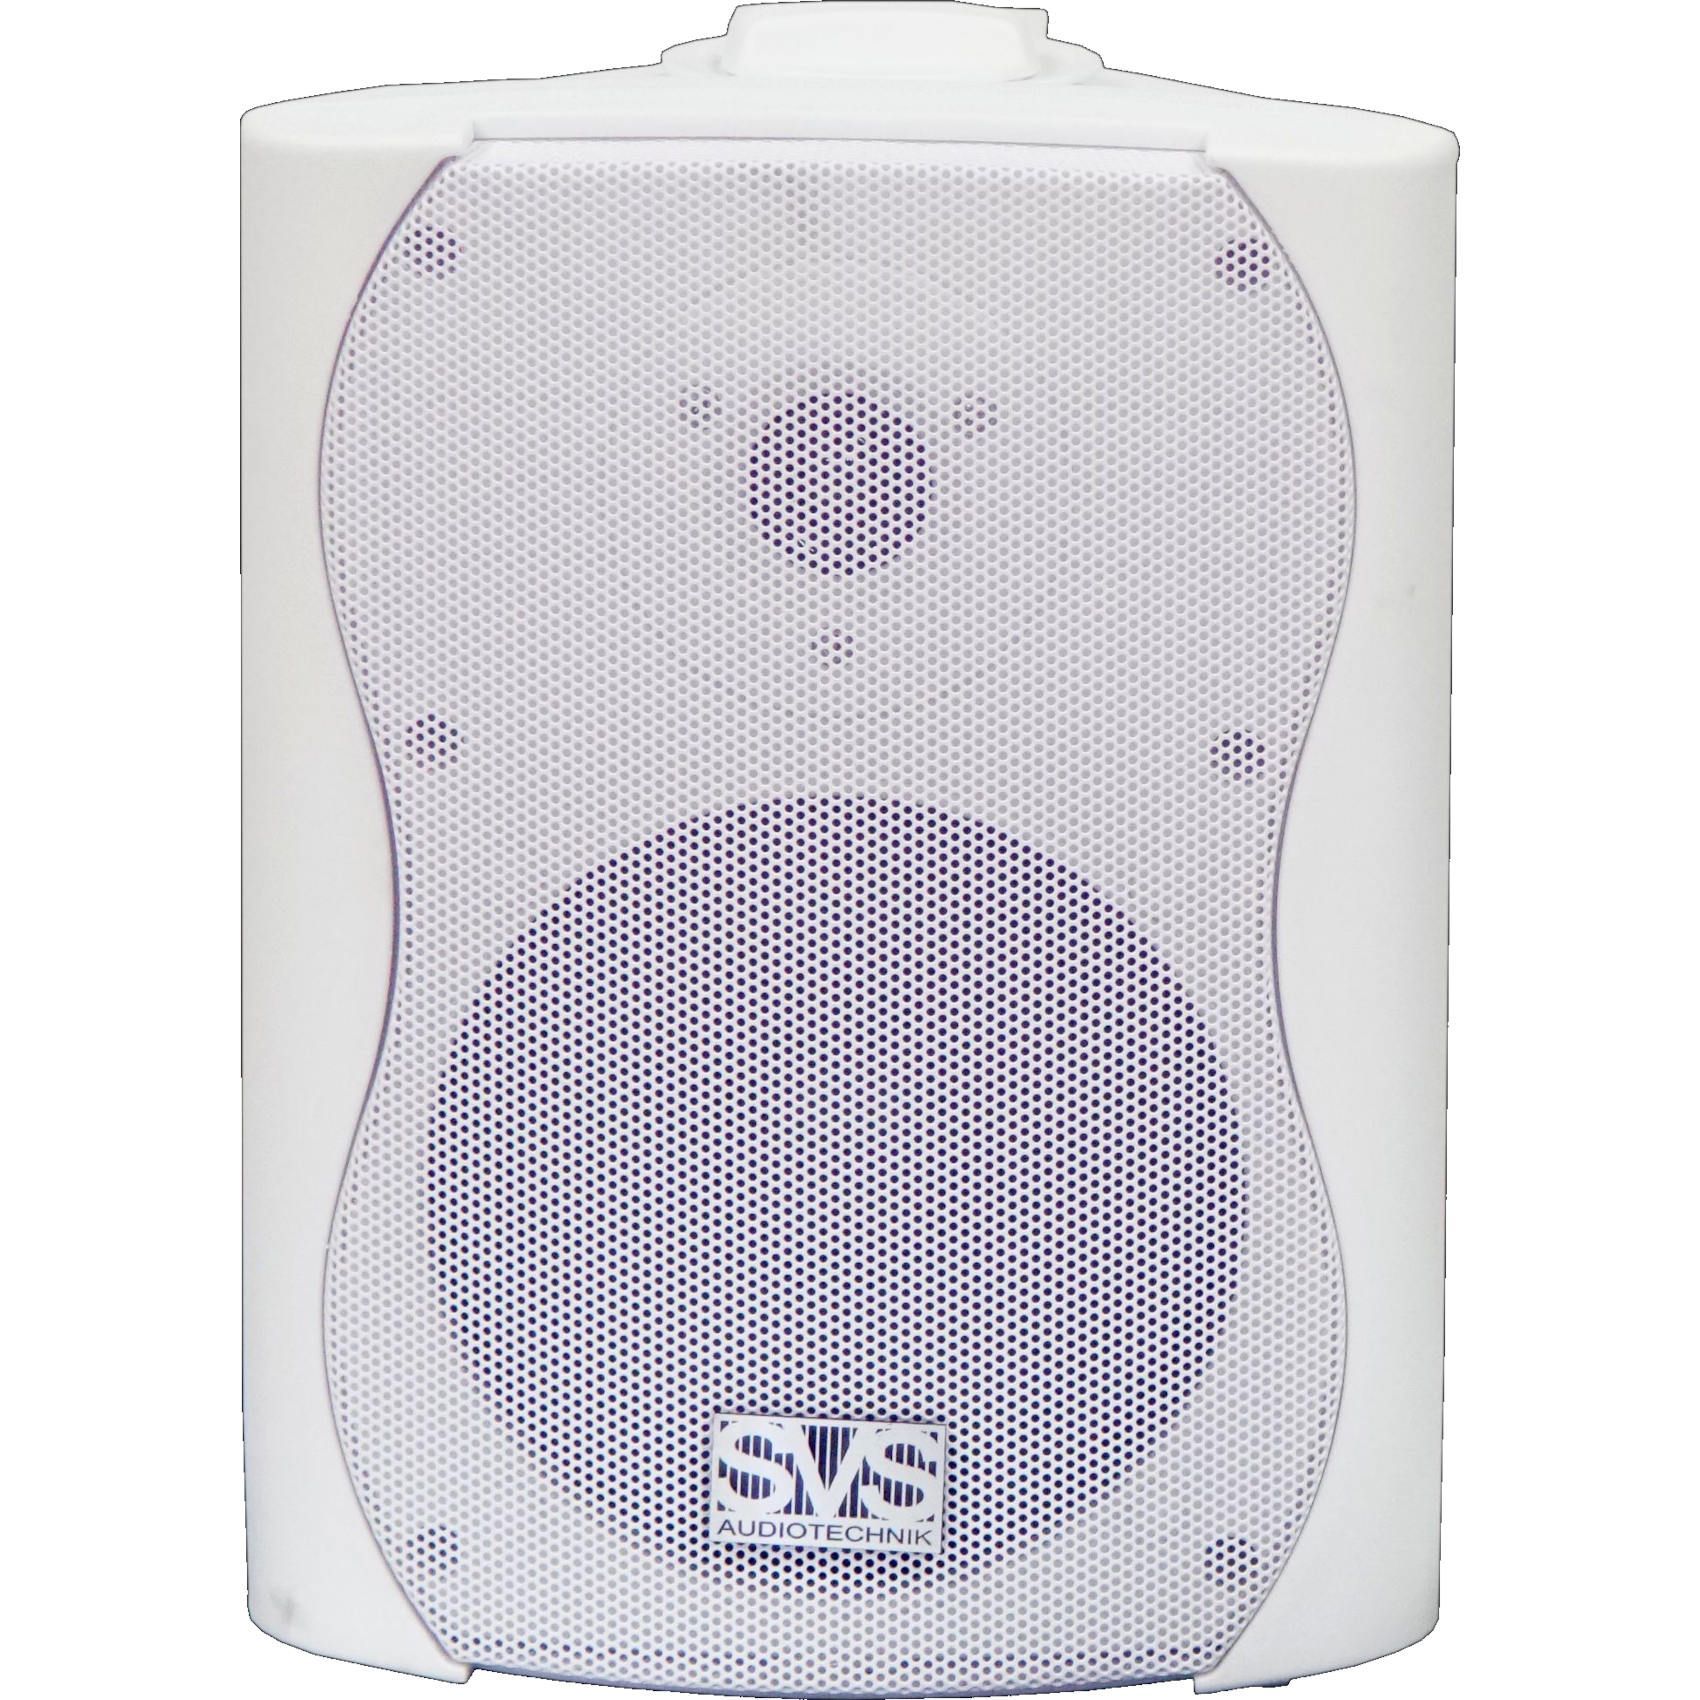 SVS Audiotechnik WS-40 White